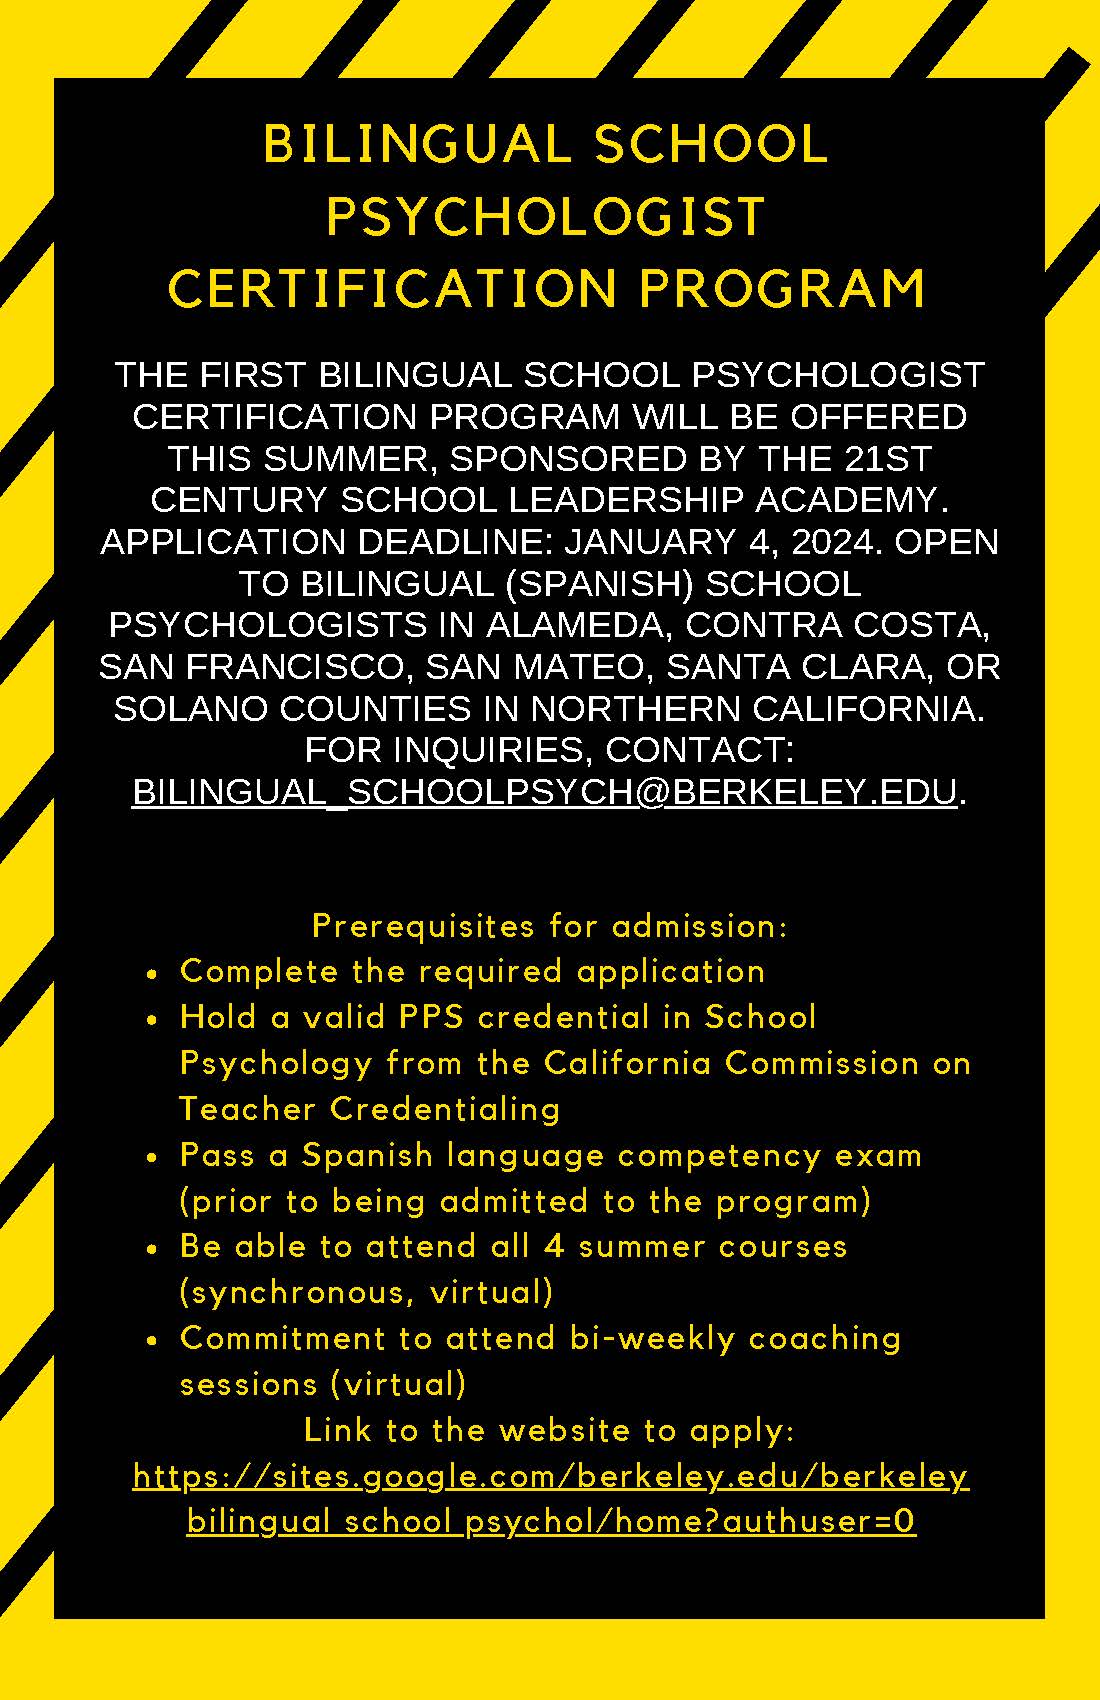 Bilingual school psychologist 